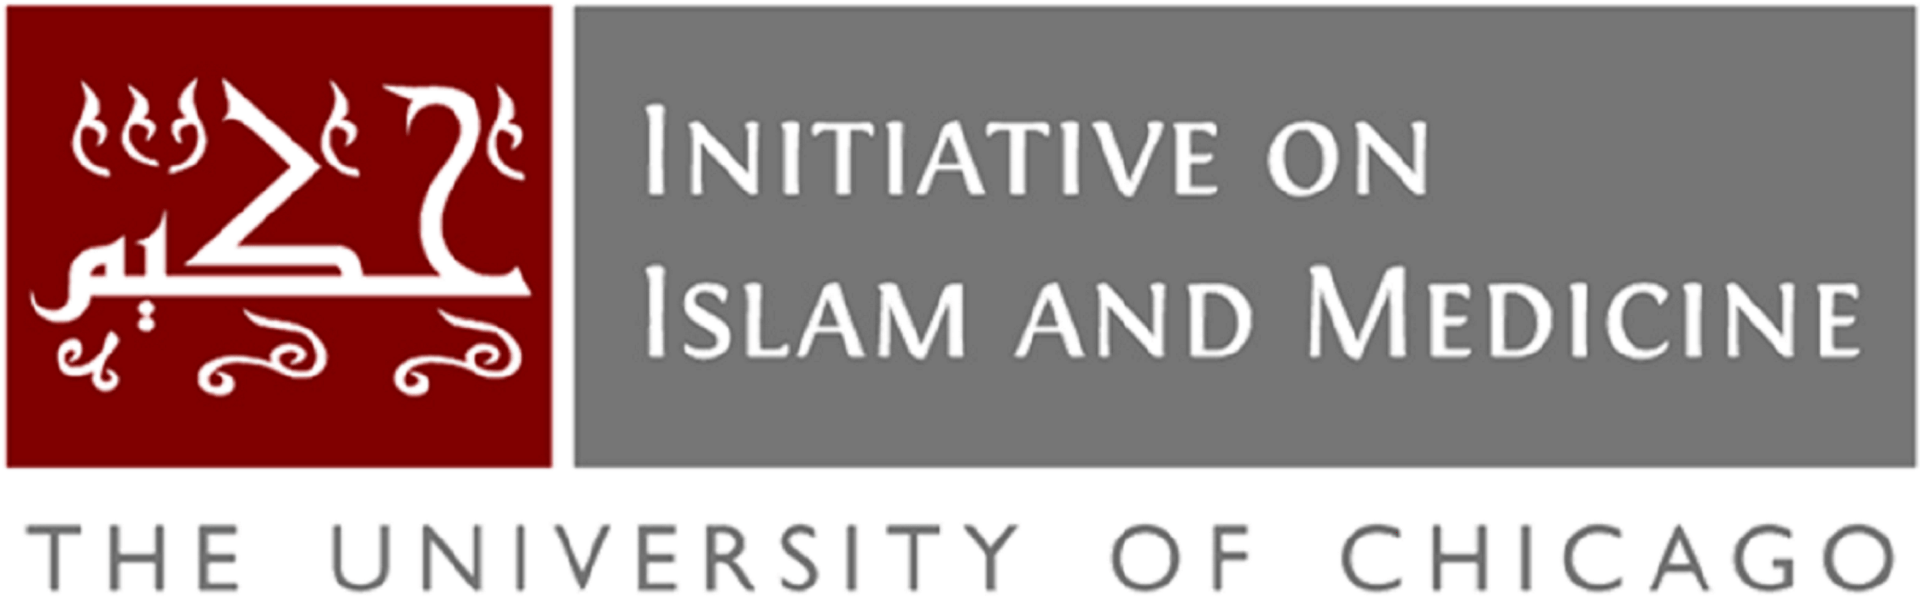 Initiative on Islam and Medicine